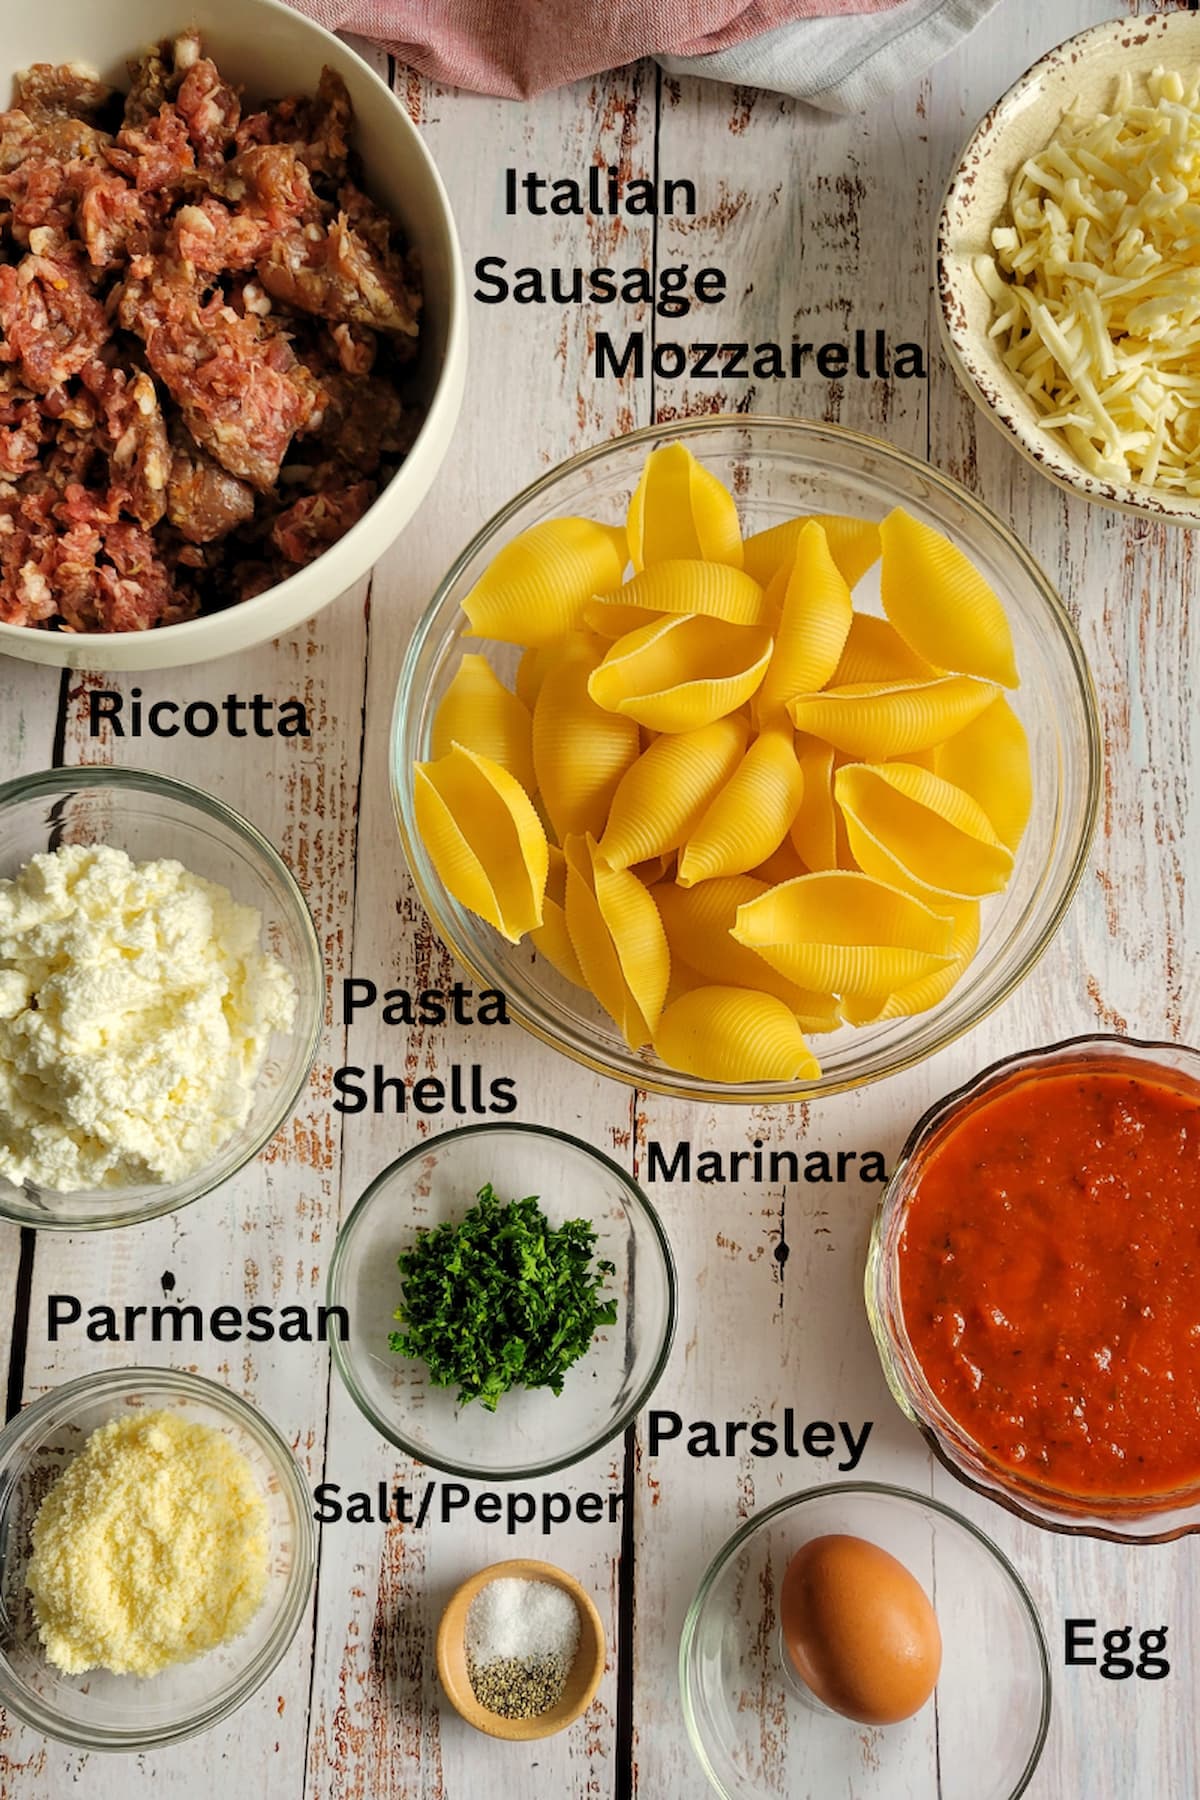 ingredients for recipe for stuffed pasta shells - pasta shells, italian sausage, ricotta, mozzarella, parsley, salt/pepper, marinara, egg, parmesan